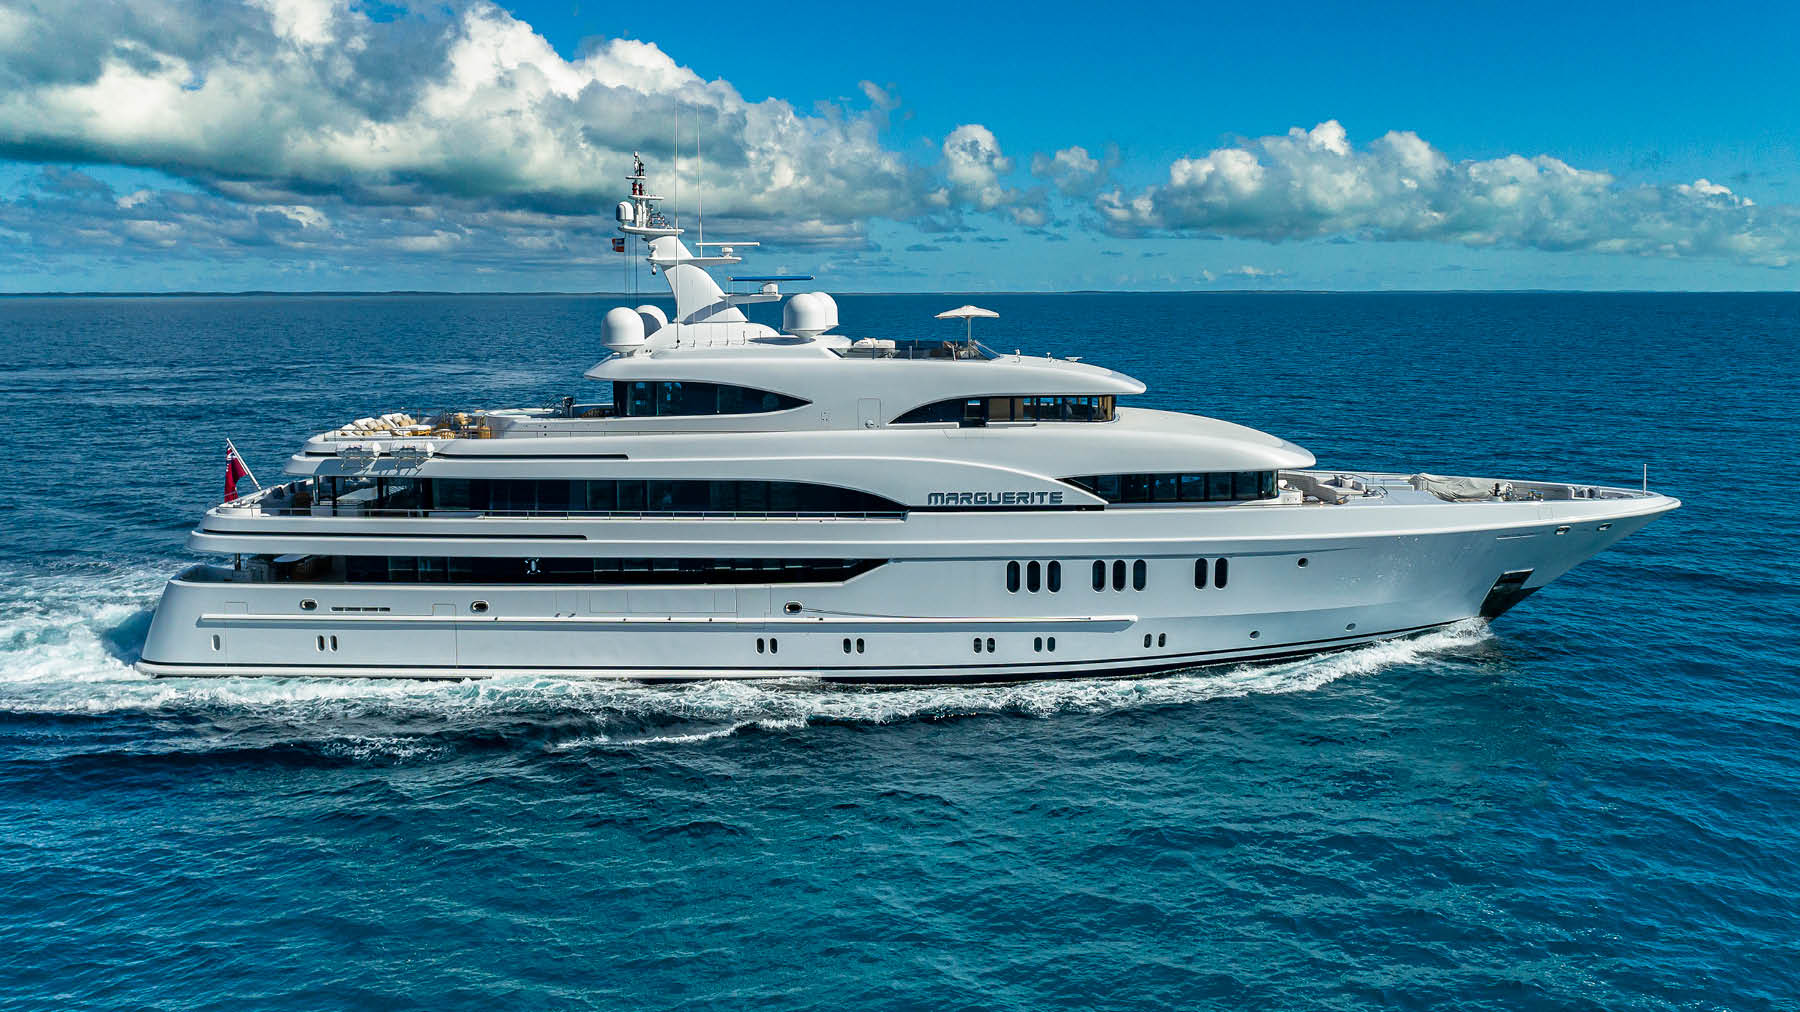 Luxury-yacht-Lurssen-Marguertie-for-charter-0402.jpg